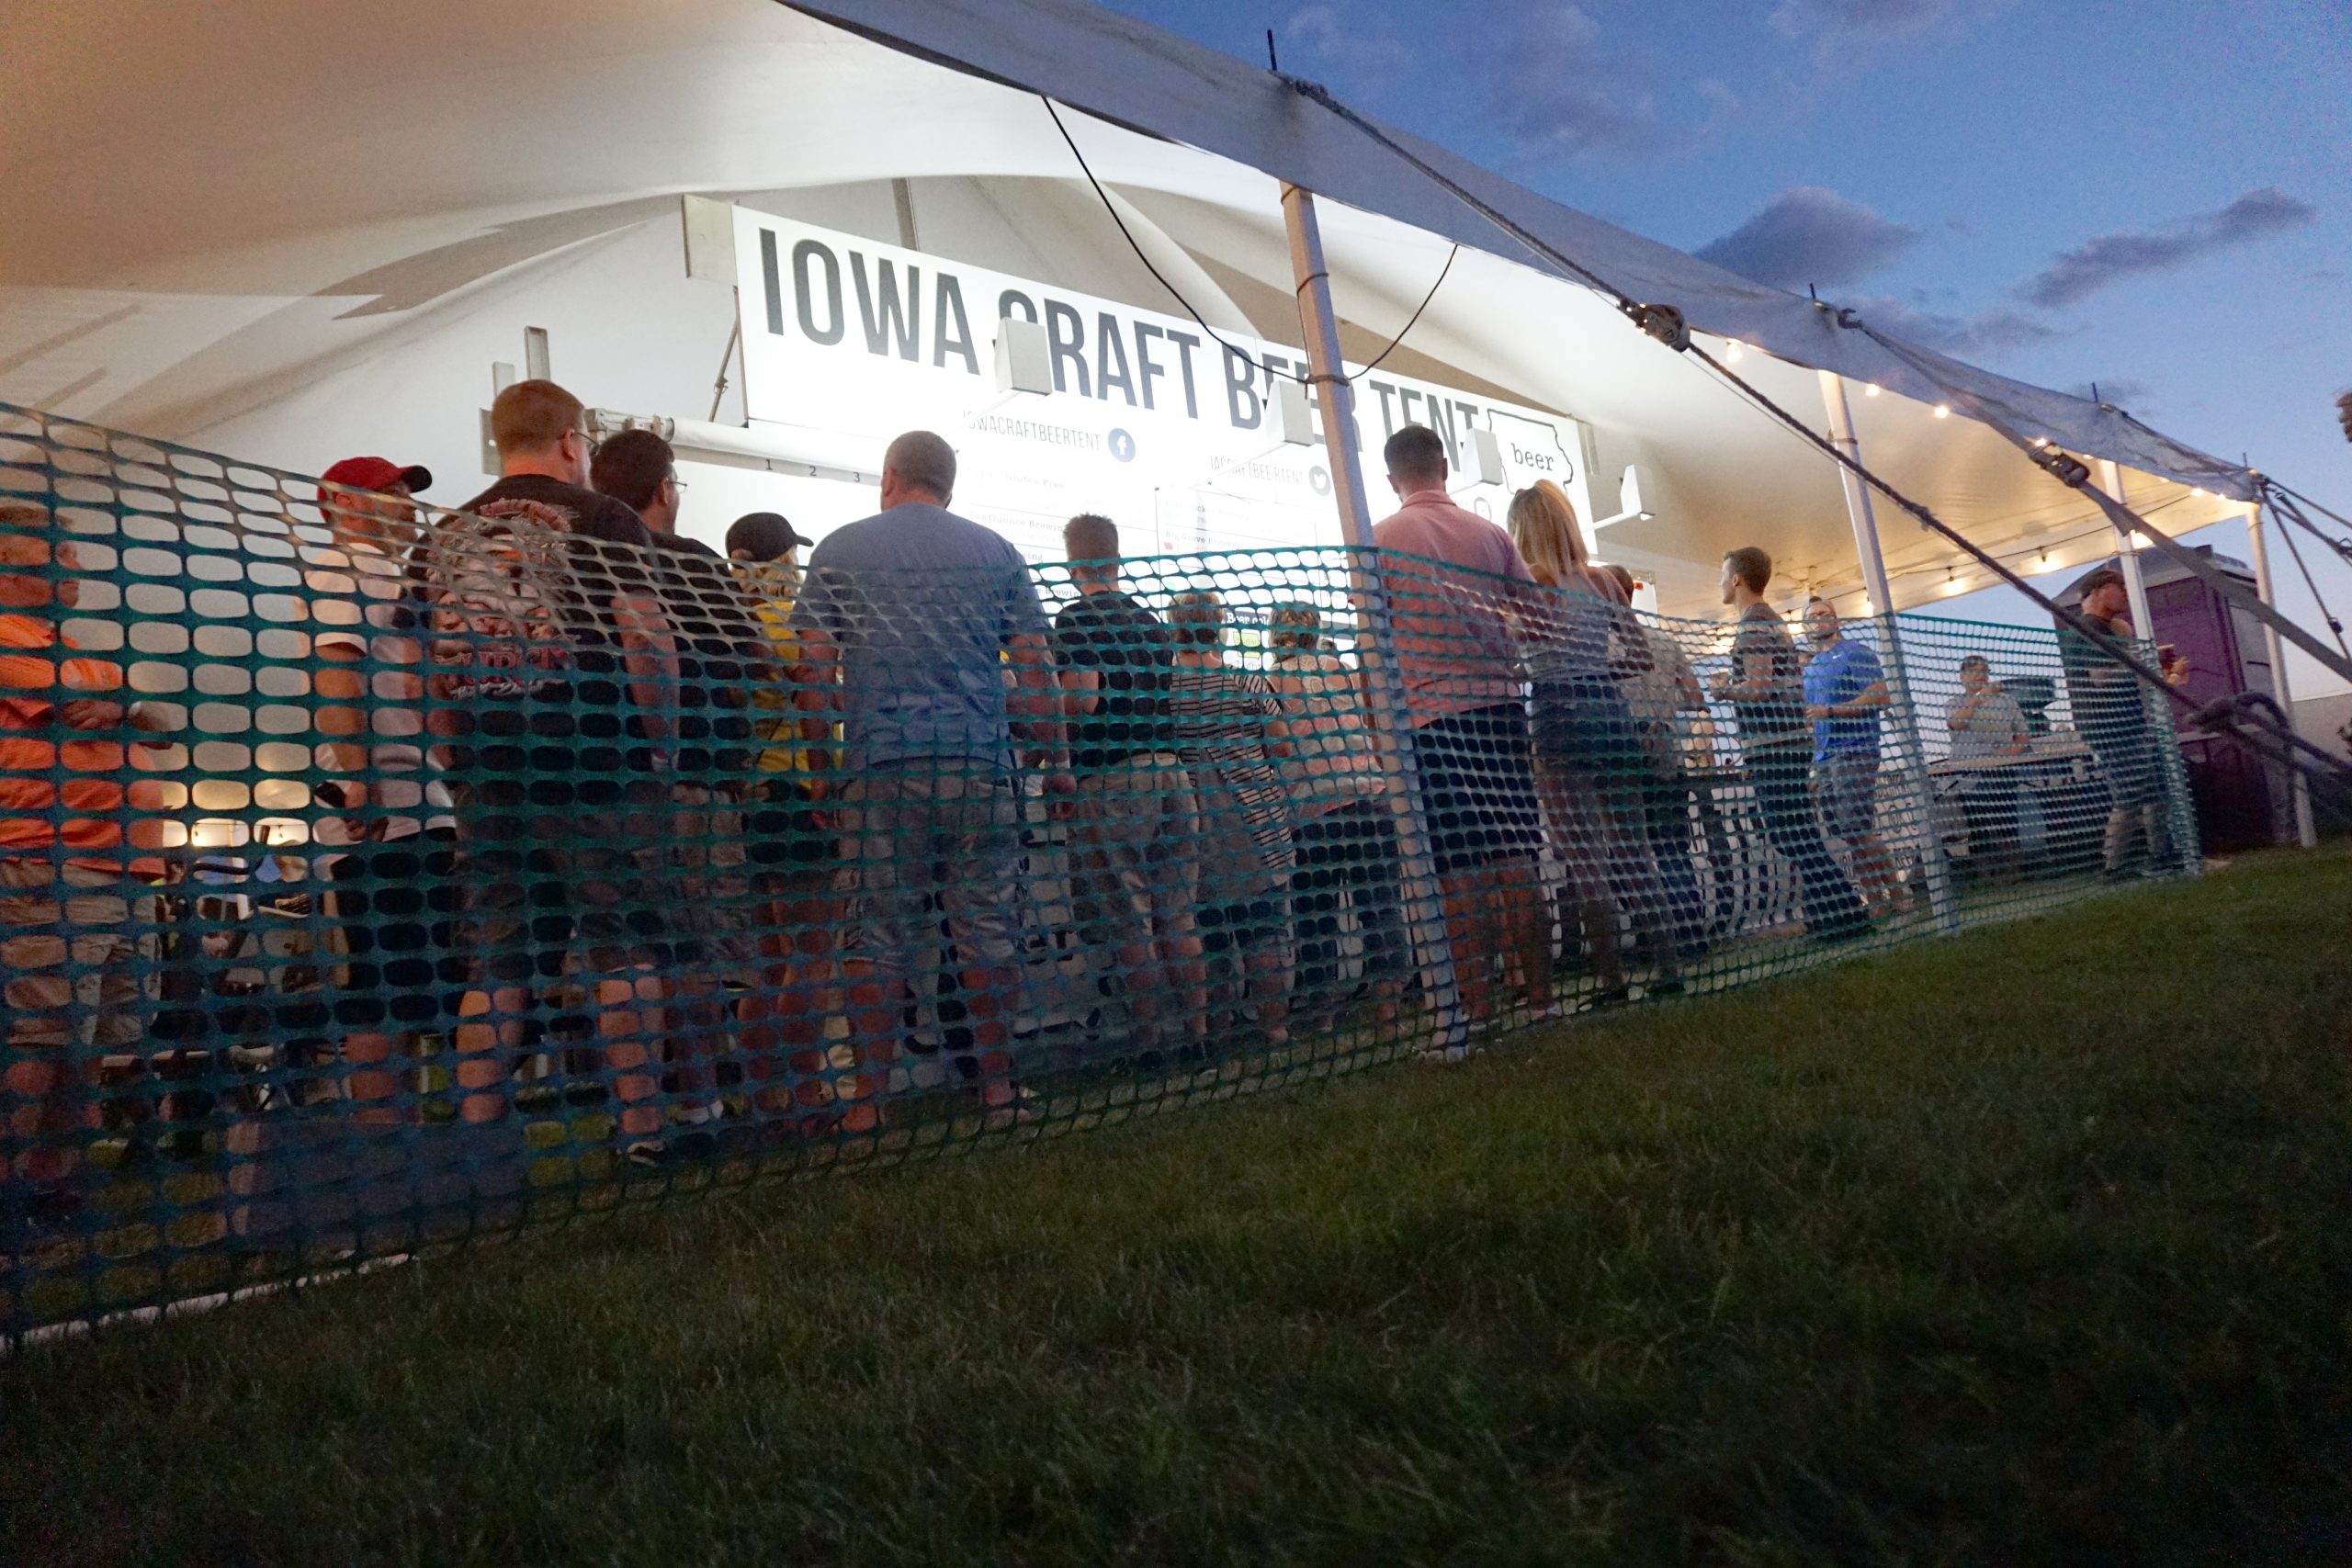 Iowa Craft Beer Tent under a Big Ten Rentals Tent at Blues and BBQ in North Libery, Iowa